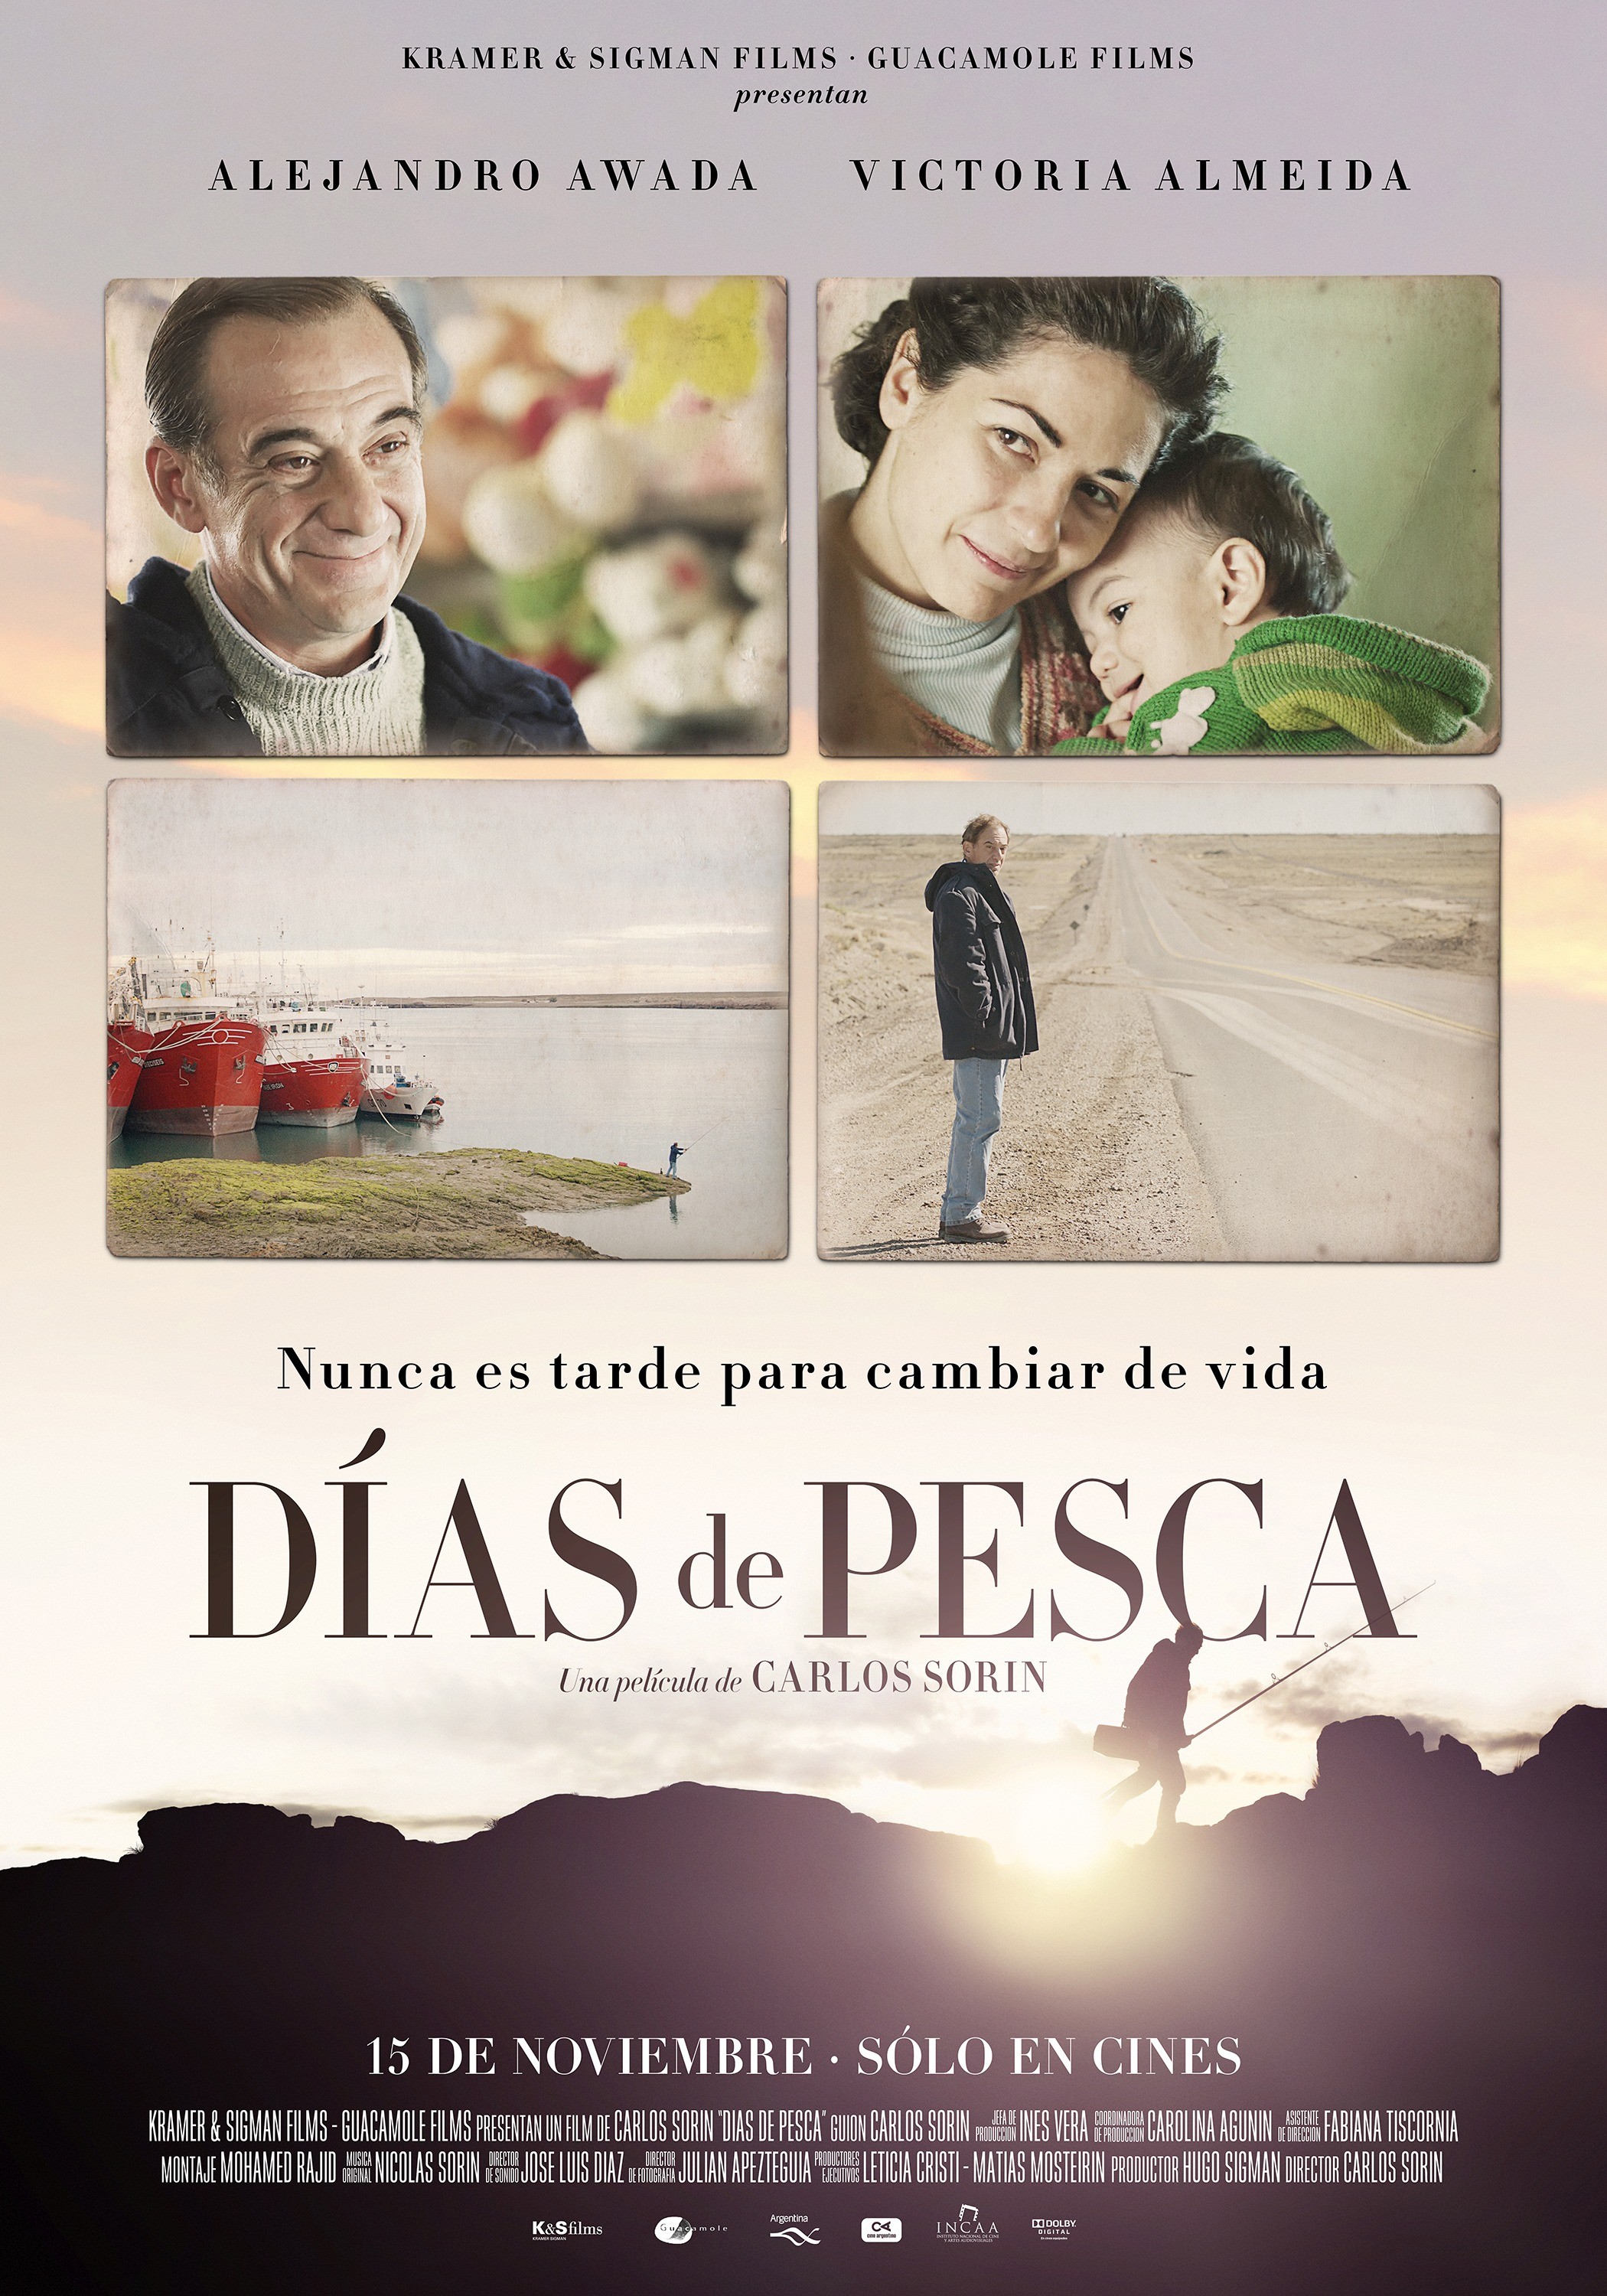 Mega Sized Movie Poster Image for Días de pesca (#2 of 2)